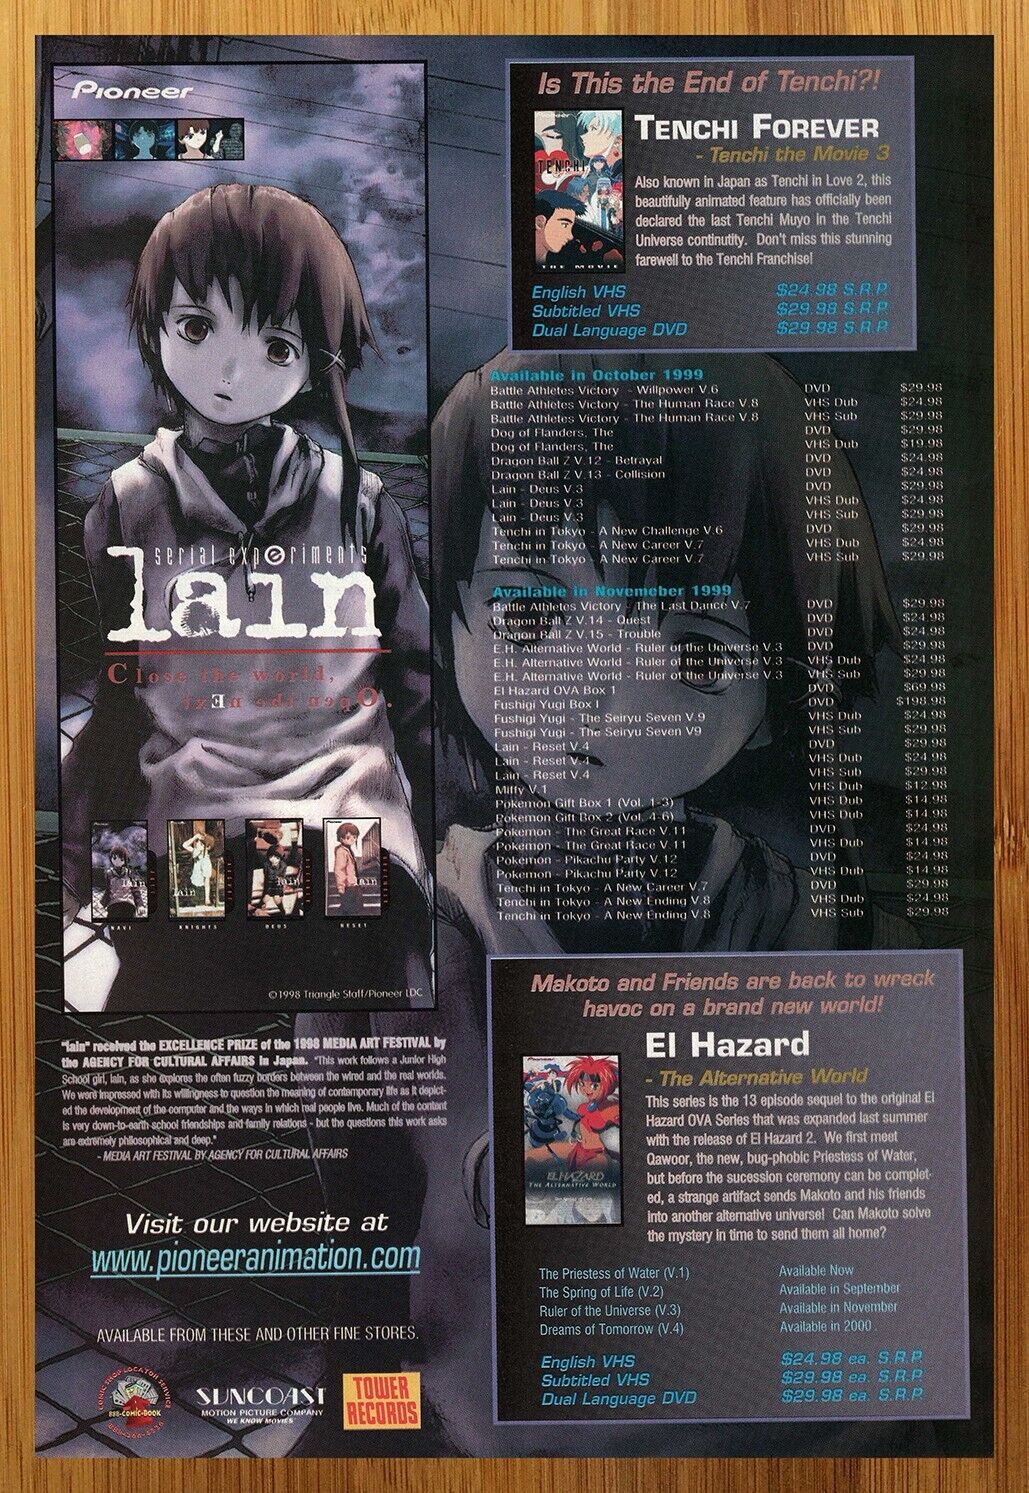 1999 Serial Experiments Lain VHS/DVD Print Ad/Poster Anime Manga Promo Art 90s